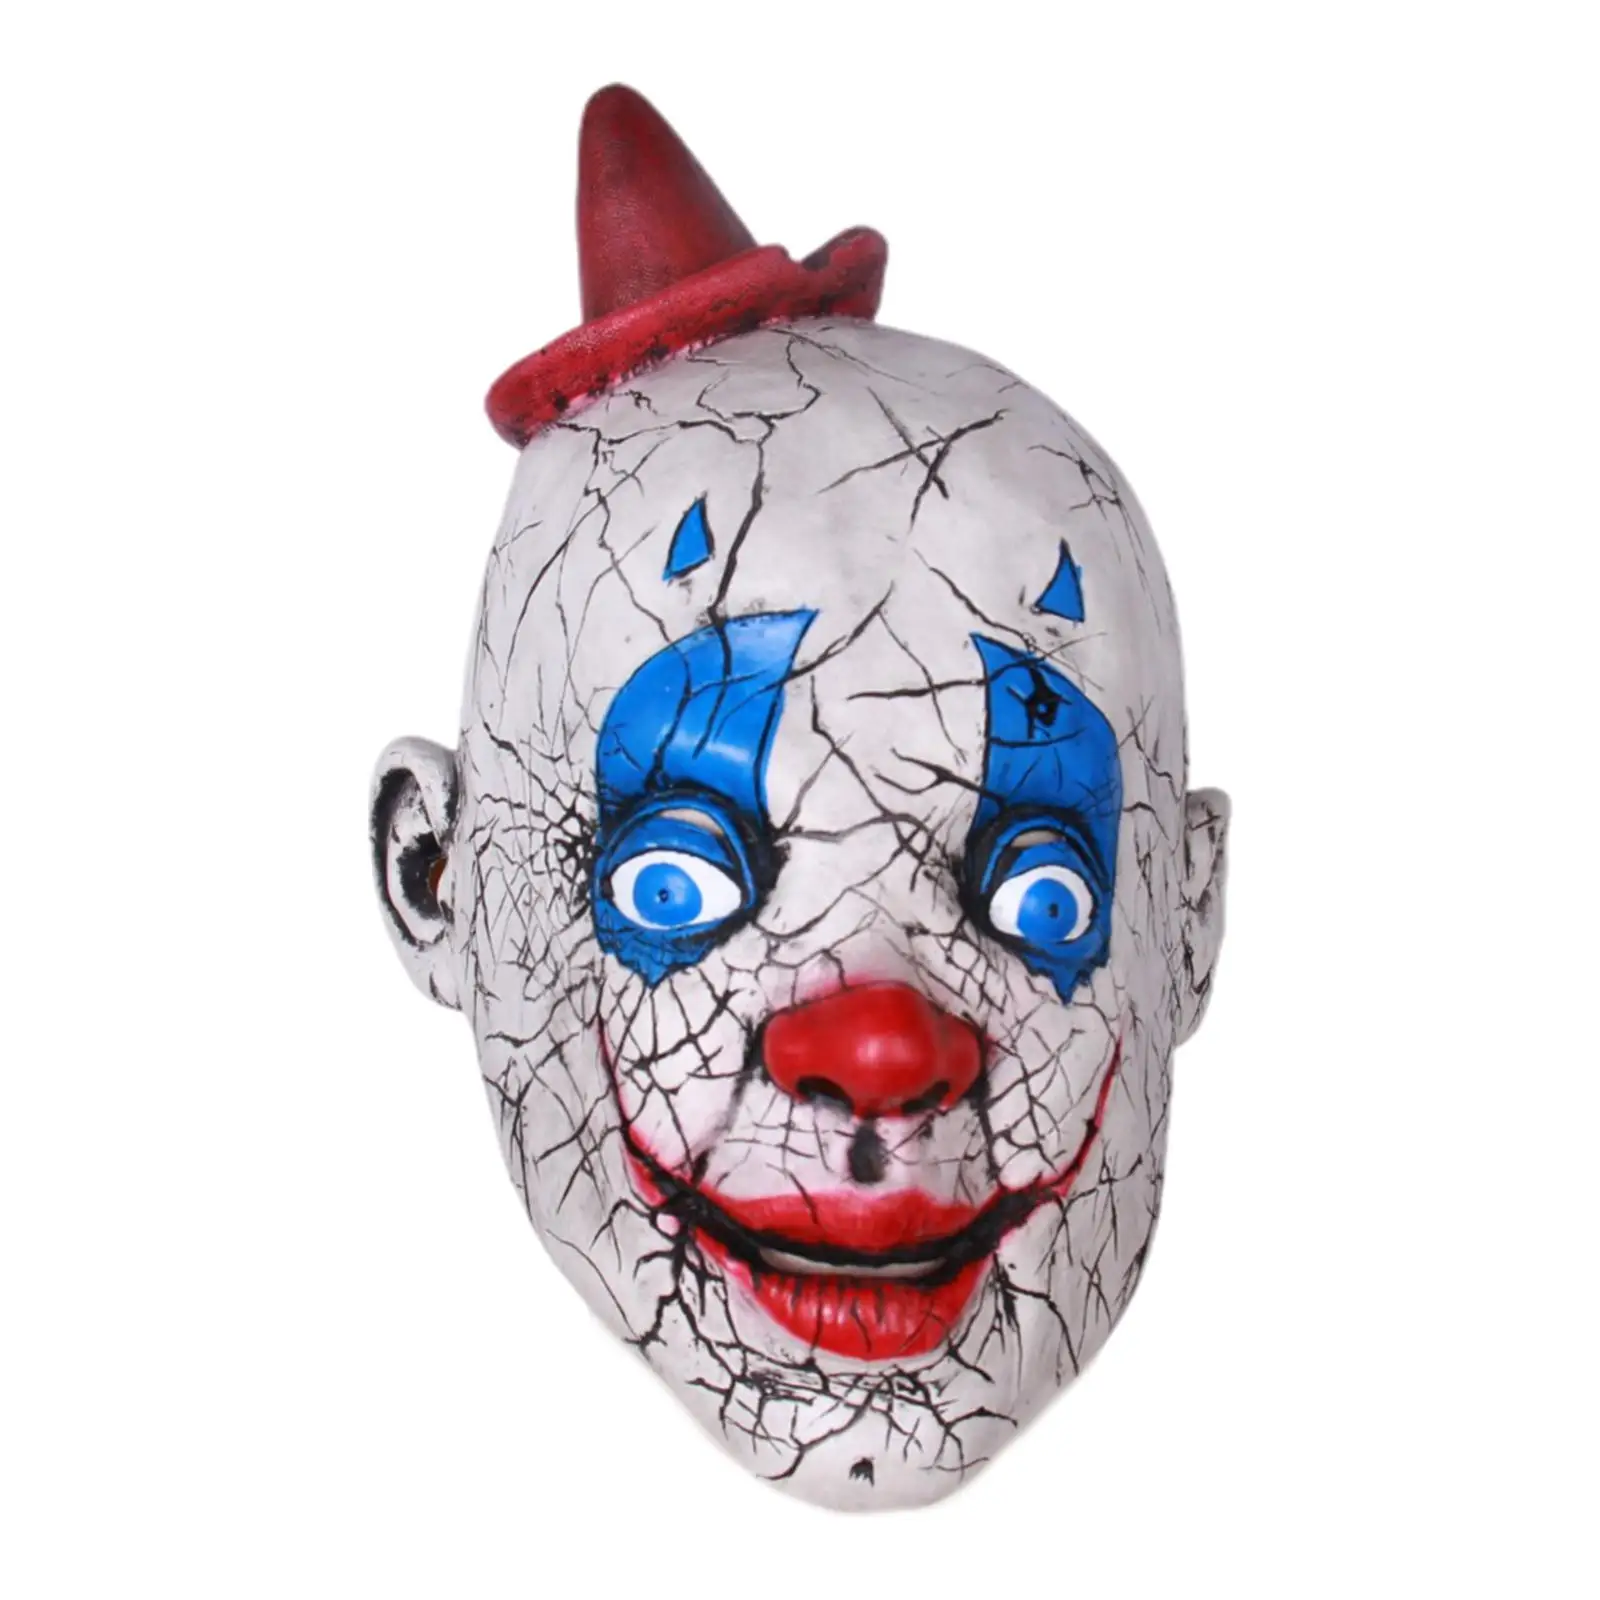 Halloween Clown Mask  Smiling Joker Mask Masquerade Costume Props